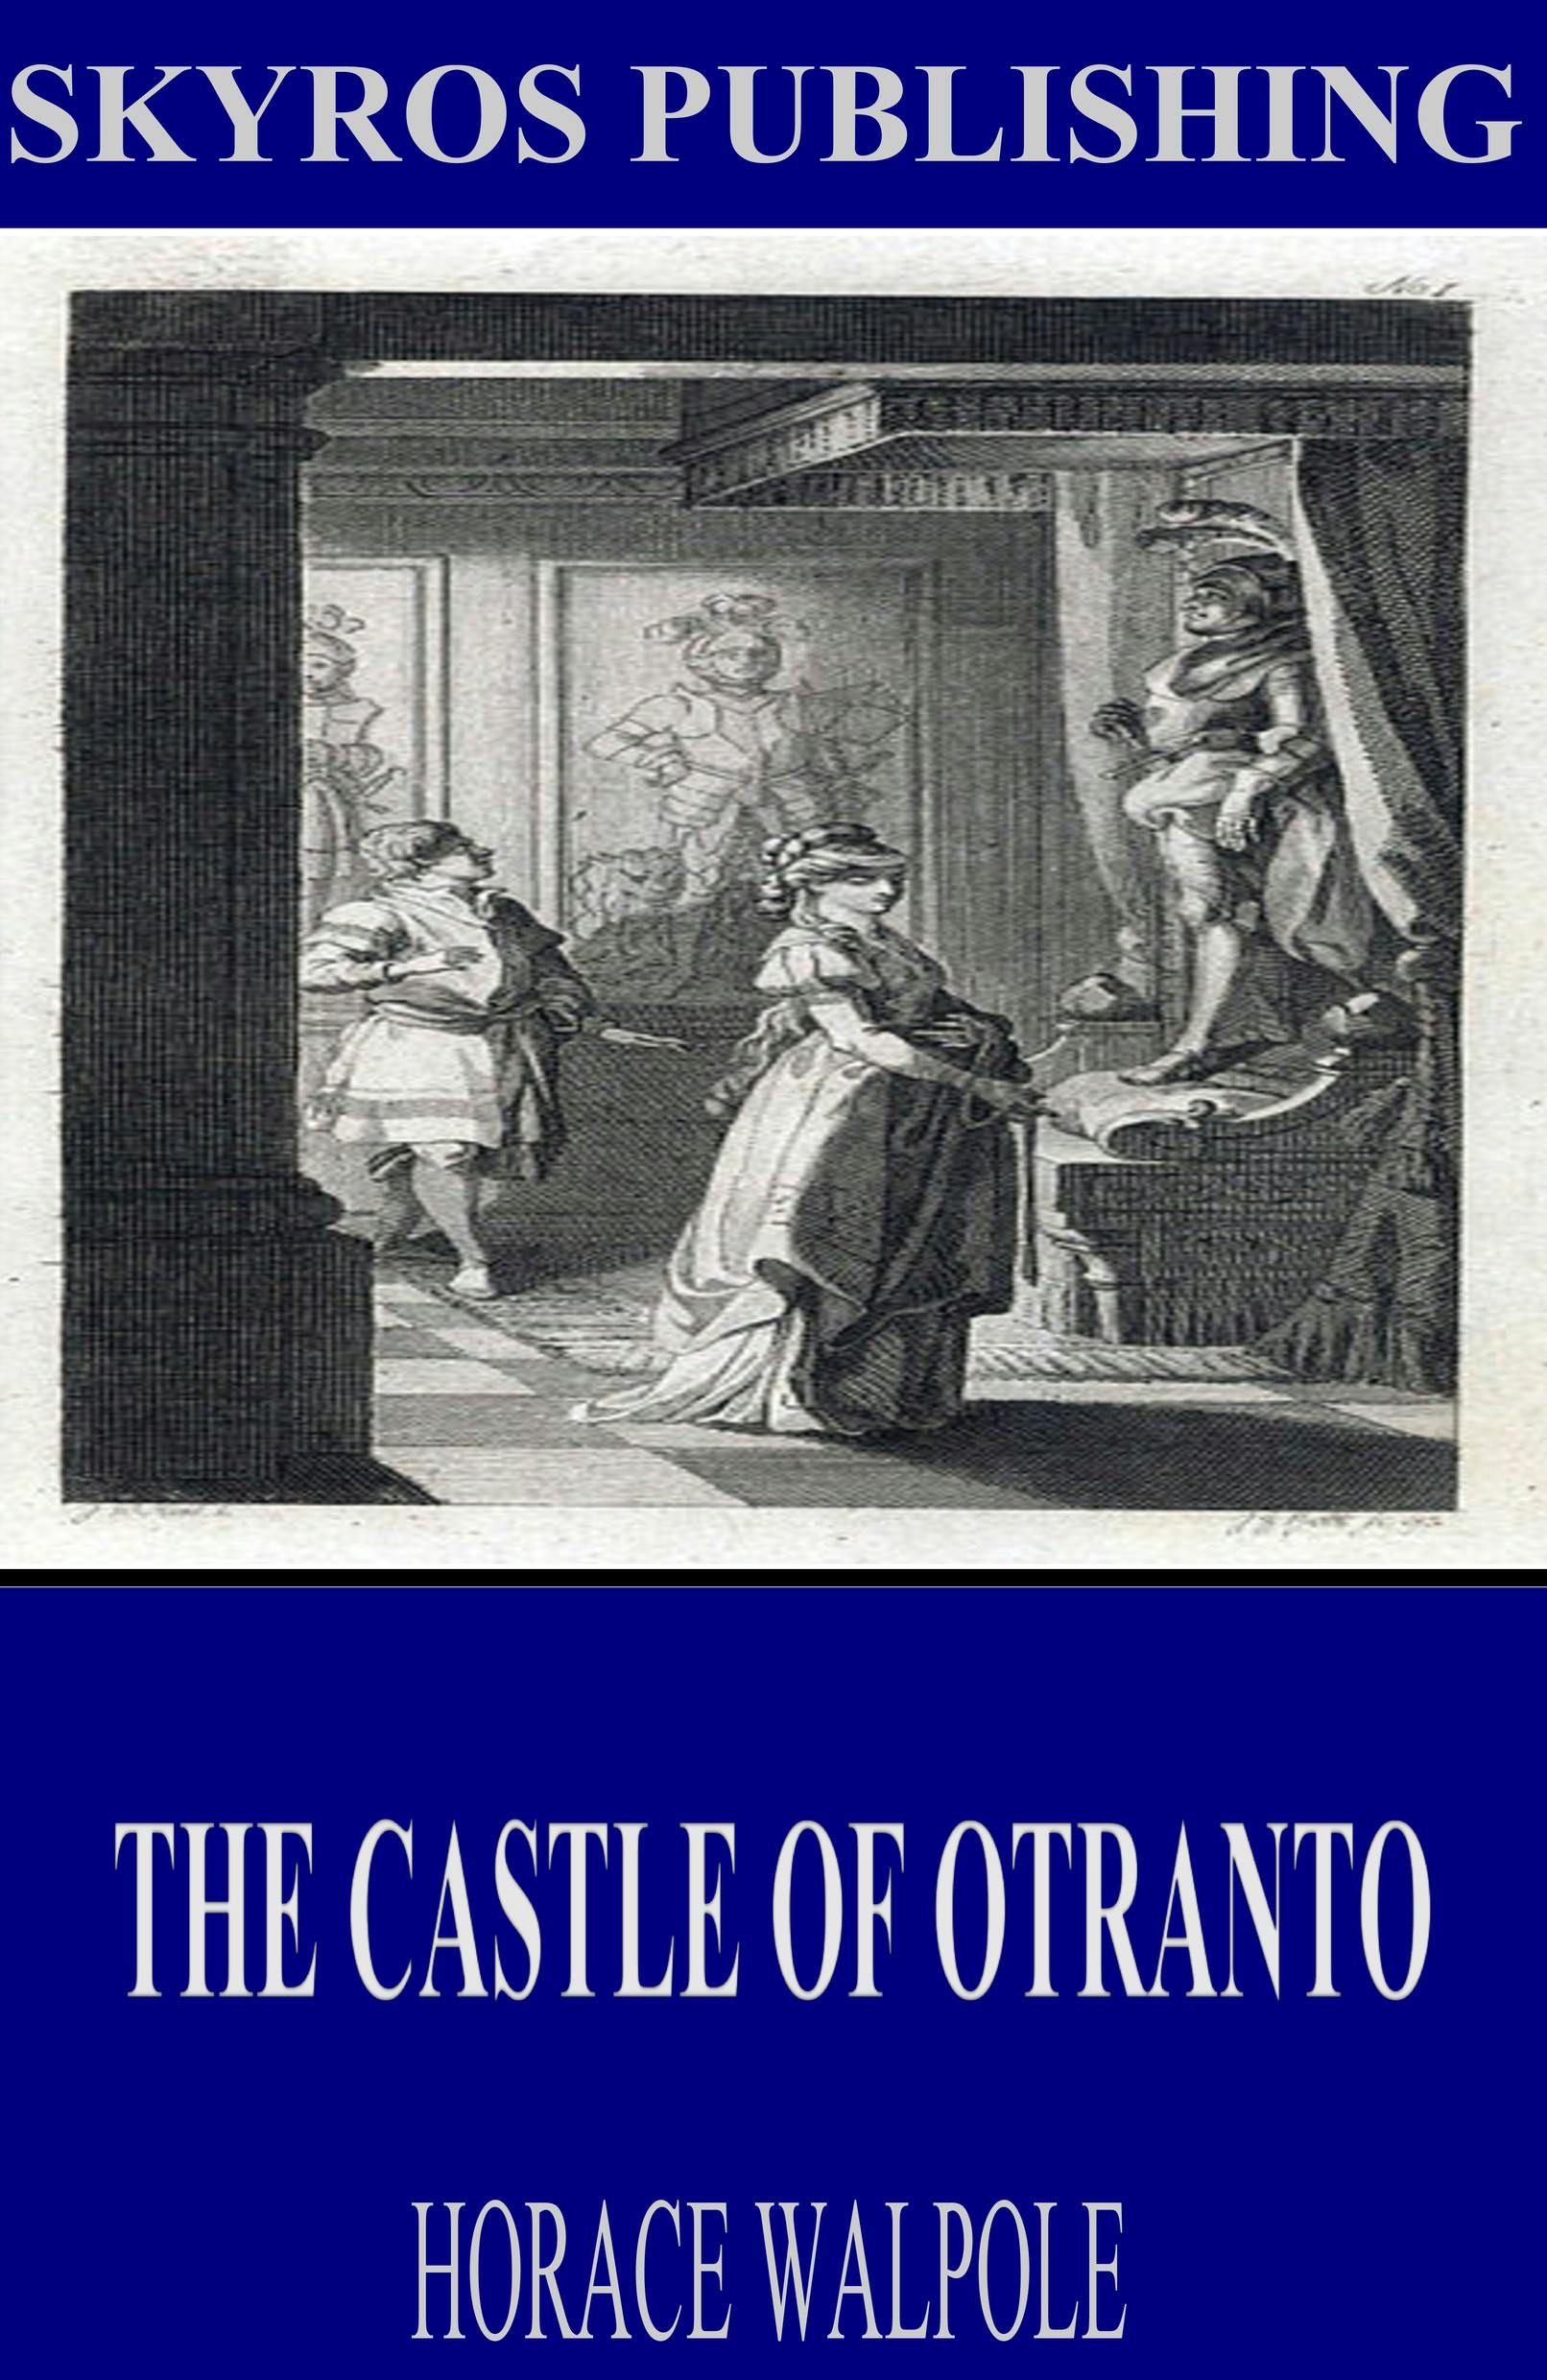 The Castle of Otranto - Horace Walpole